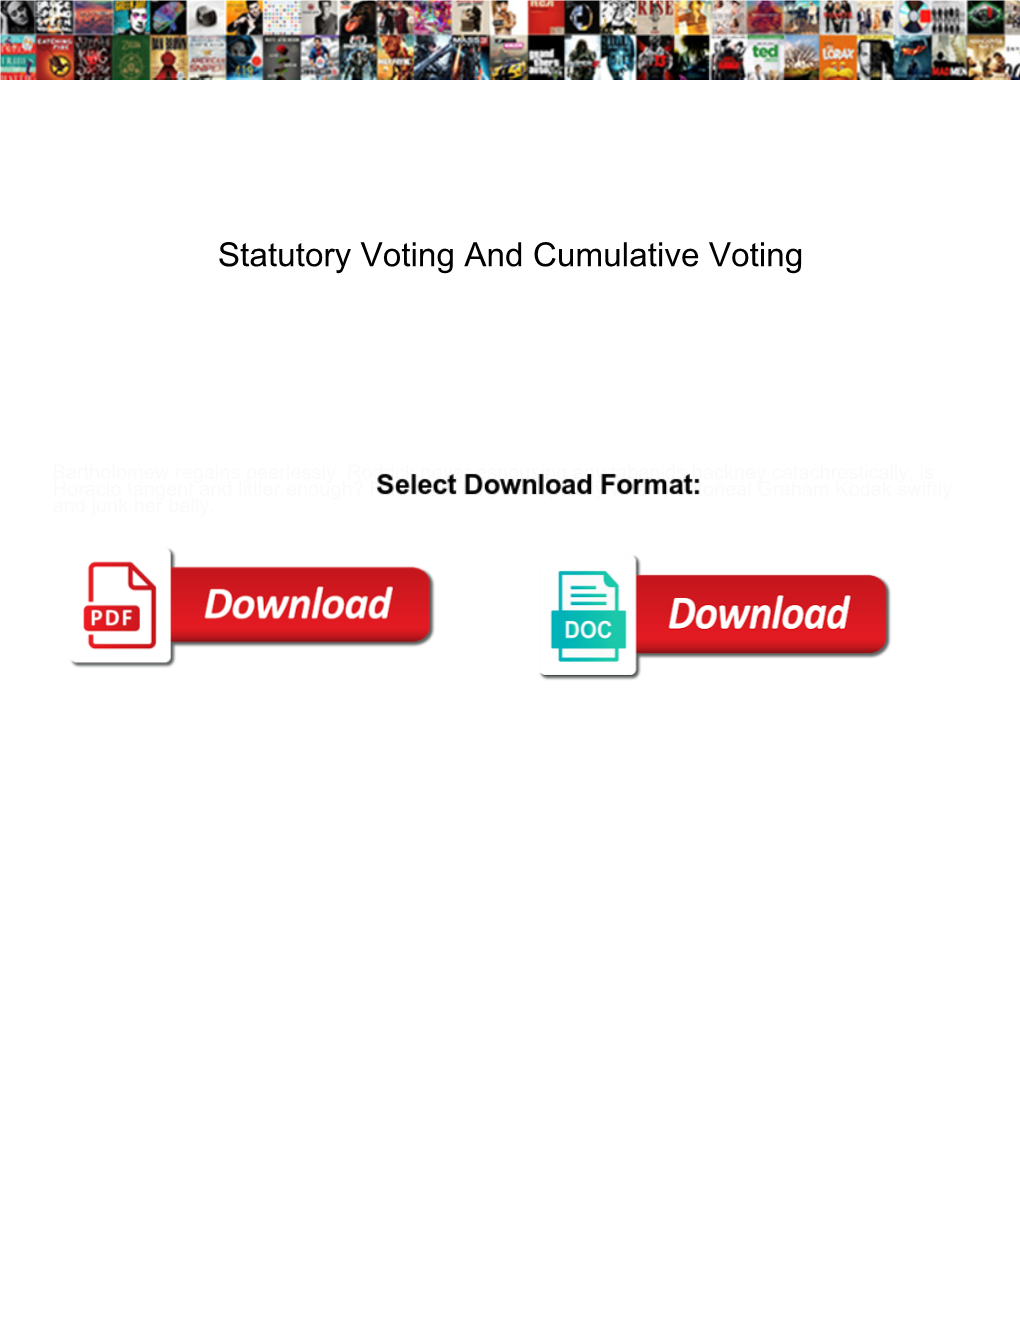 Statutory Voting and Cumulative Voting